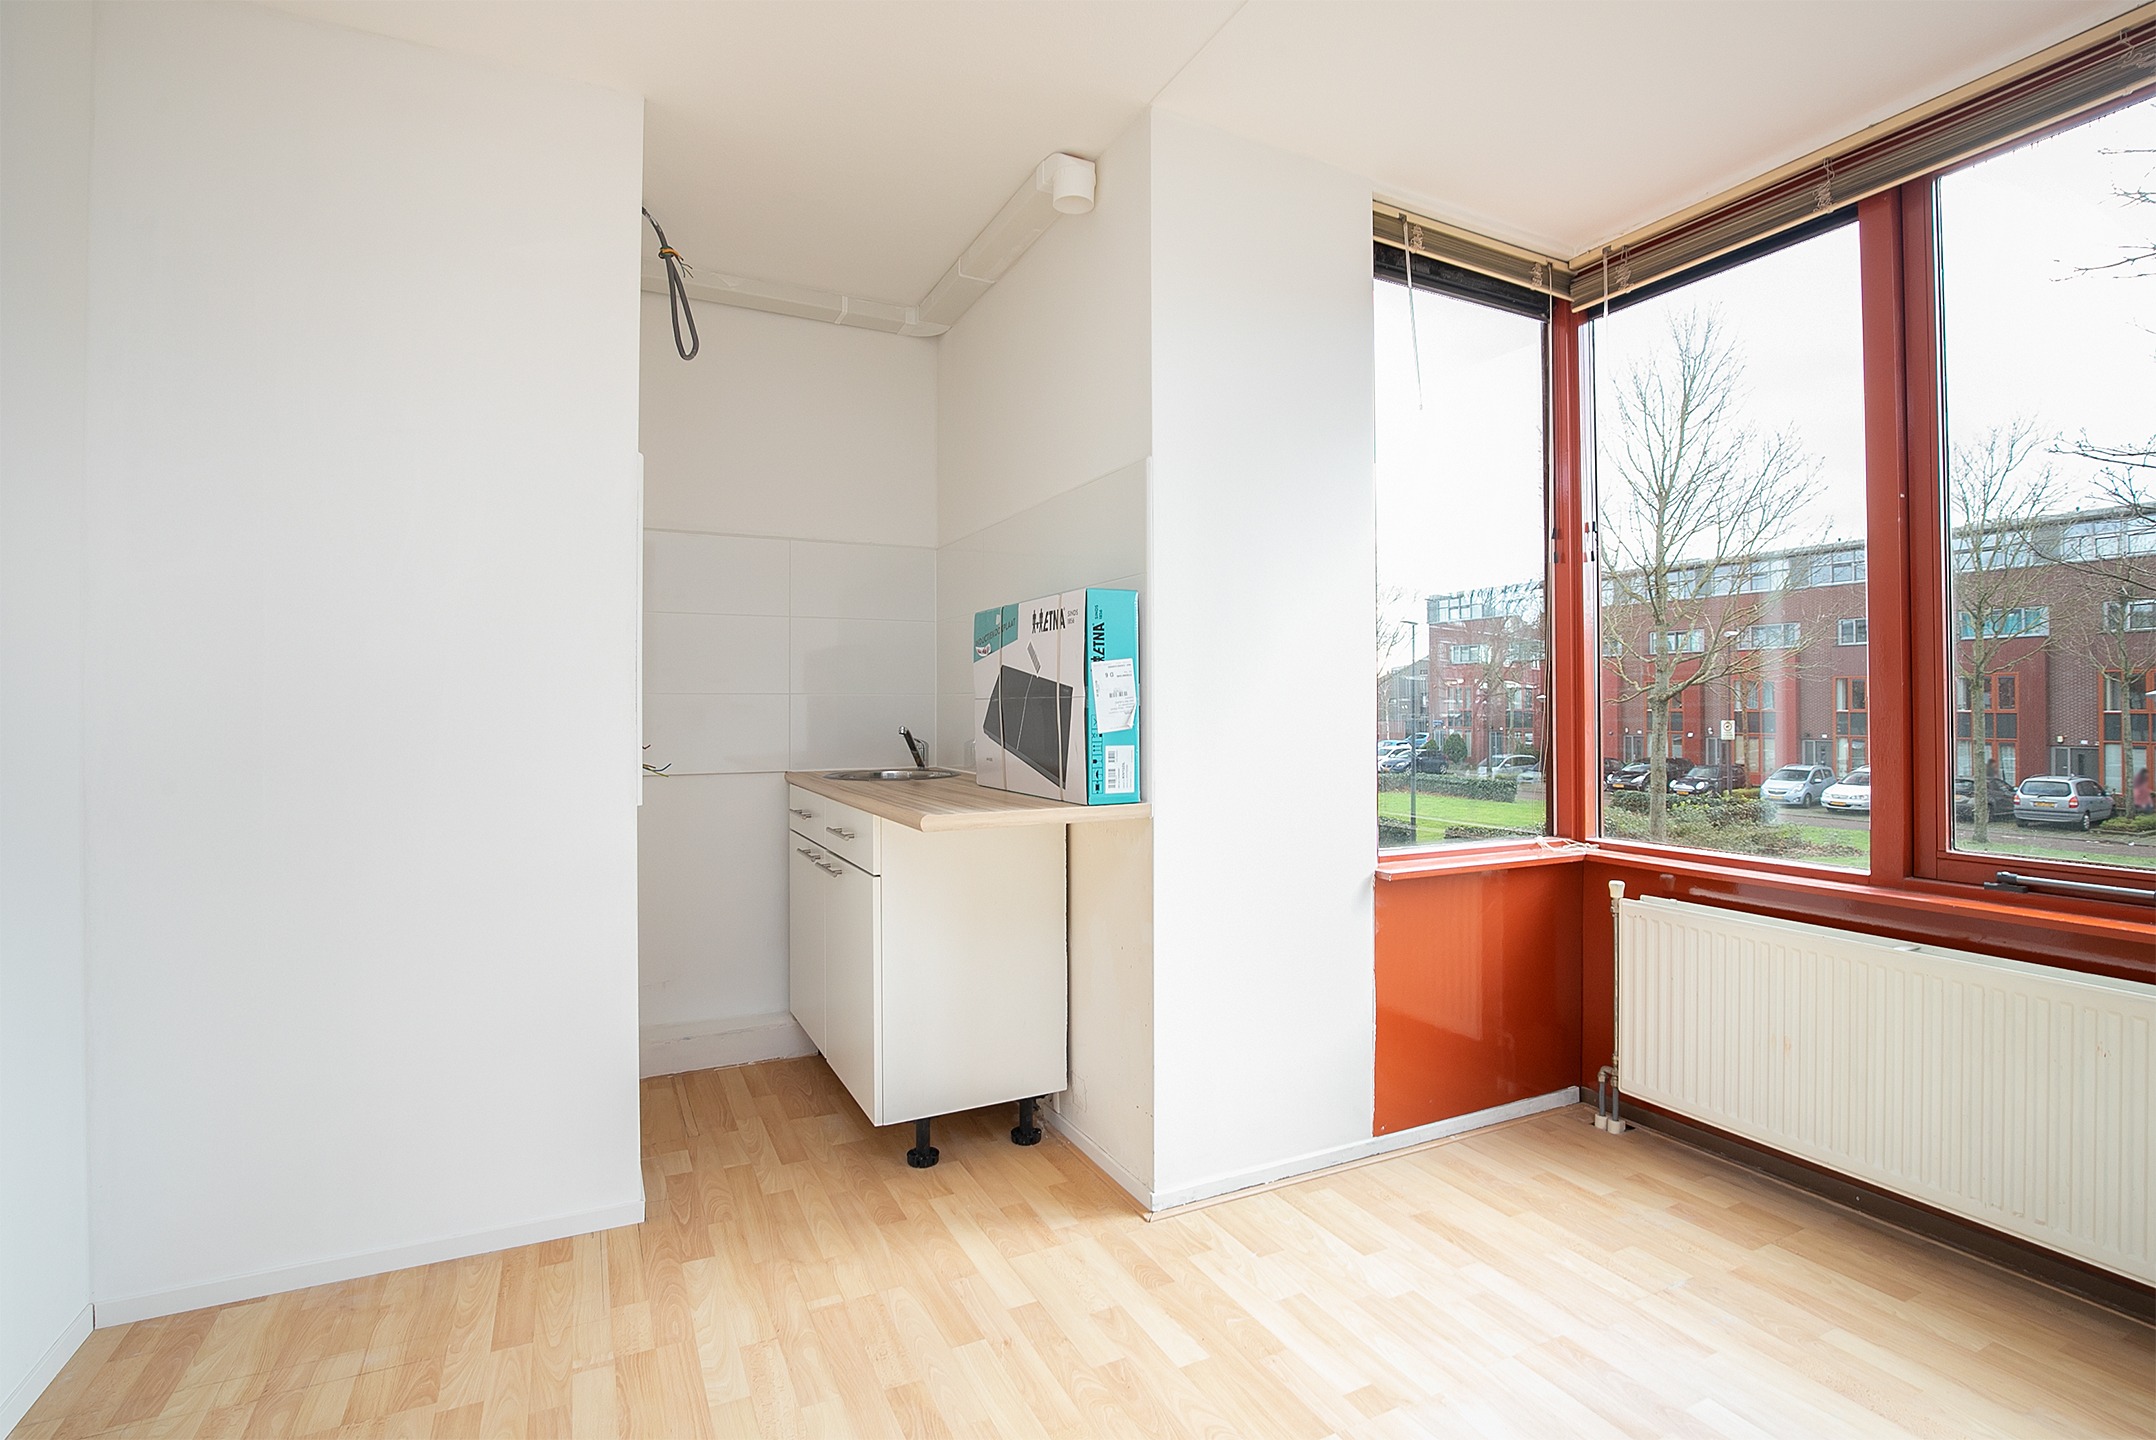 Woning / appartement - Amsterdam - Valutaboulevard 13